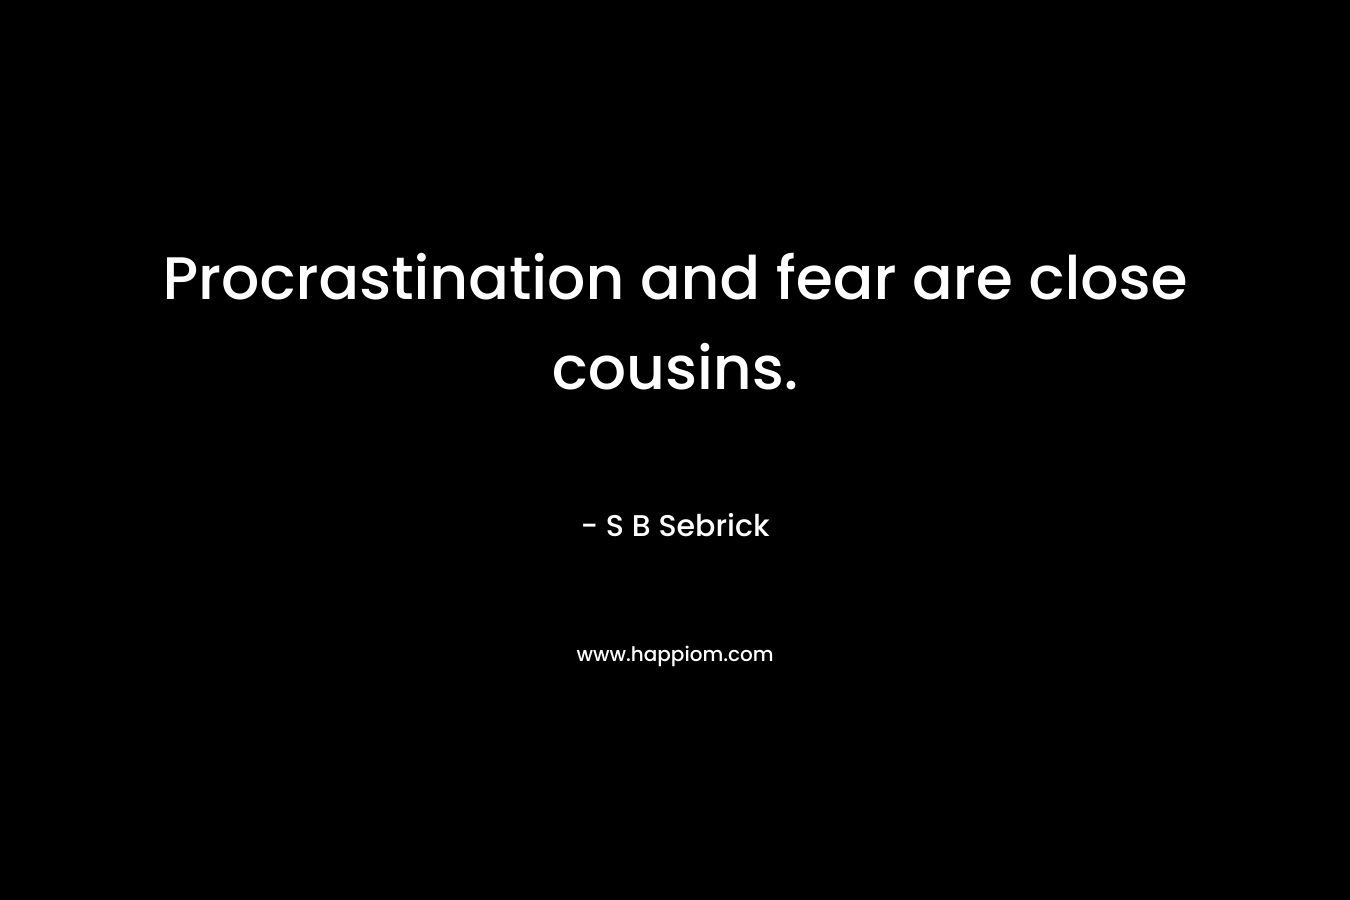 Procrastination and fear are close cousins.